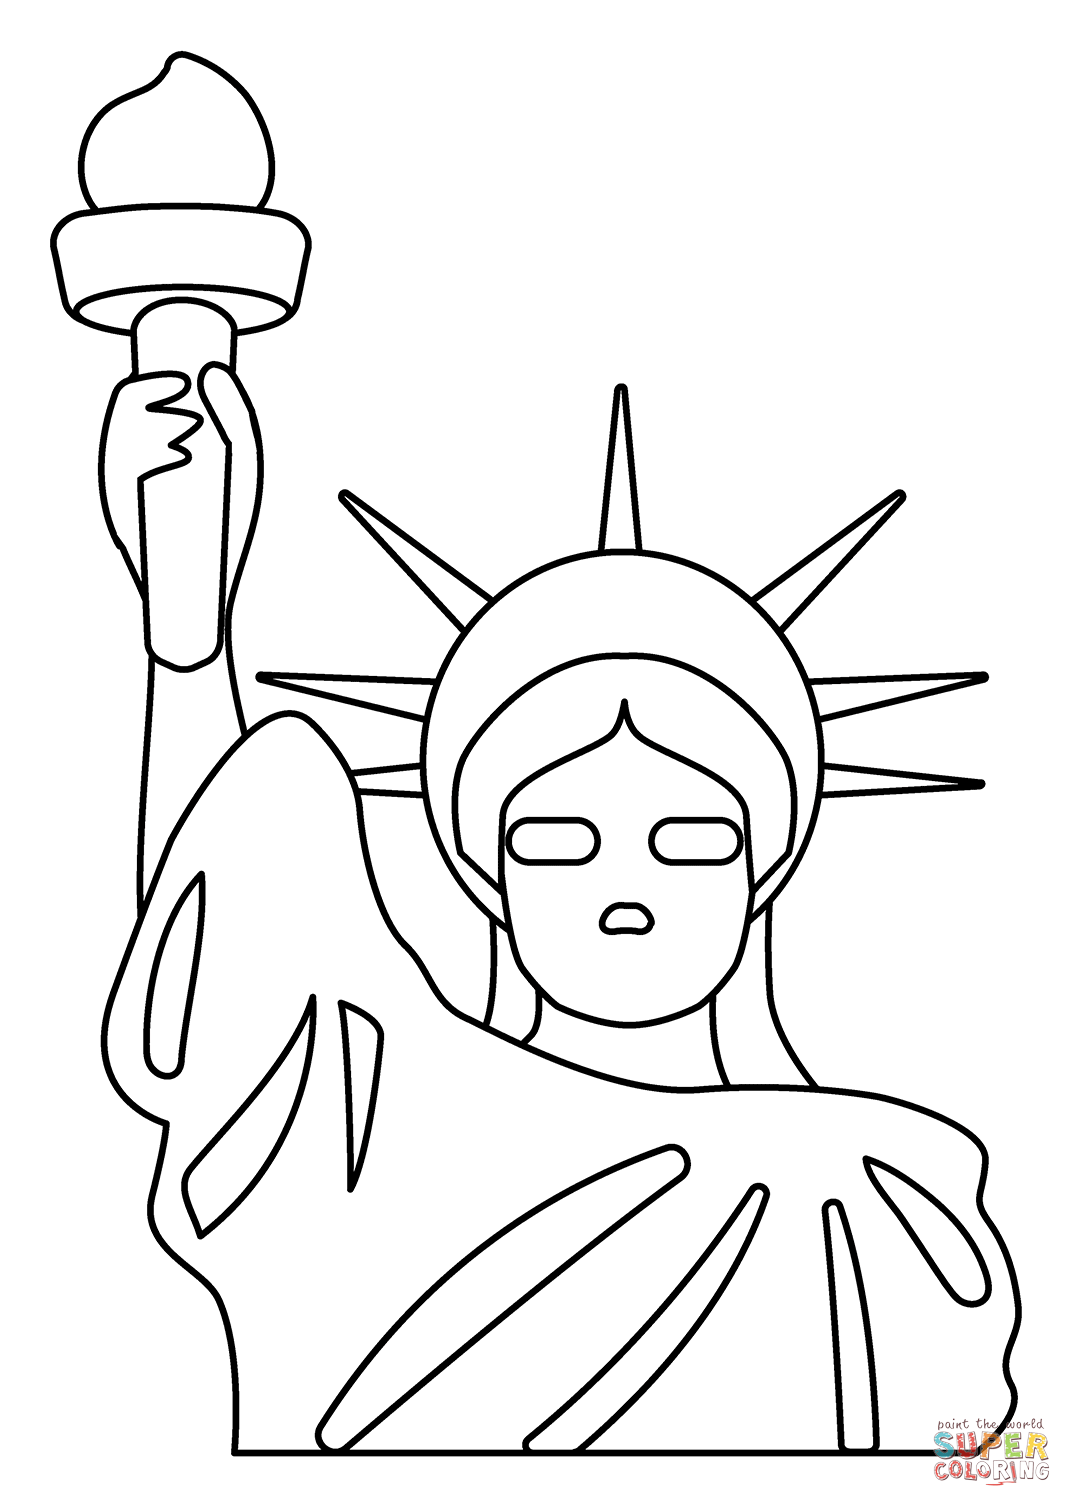 Statue of liberty emoji